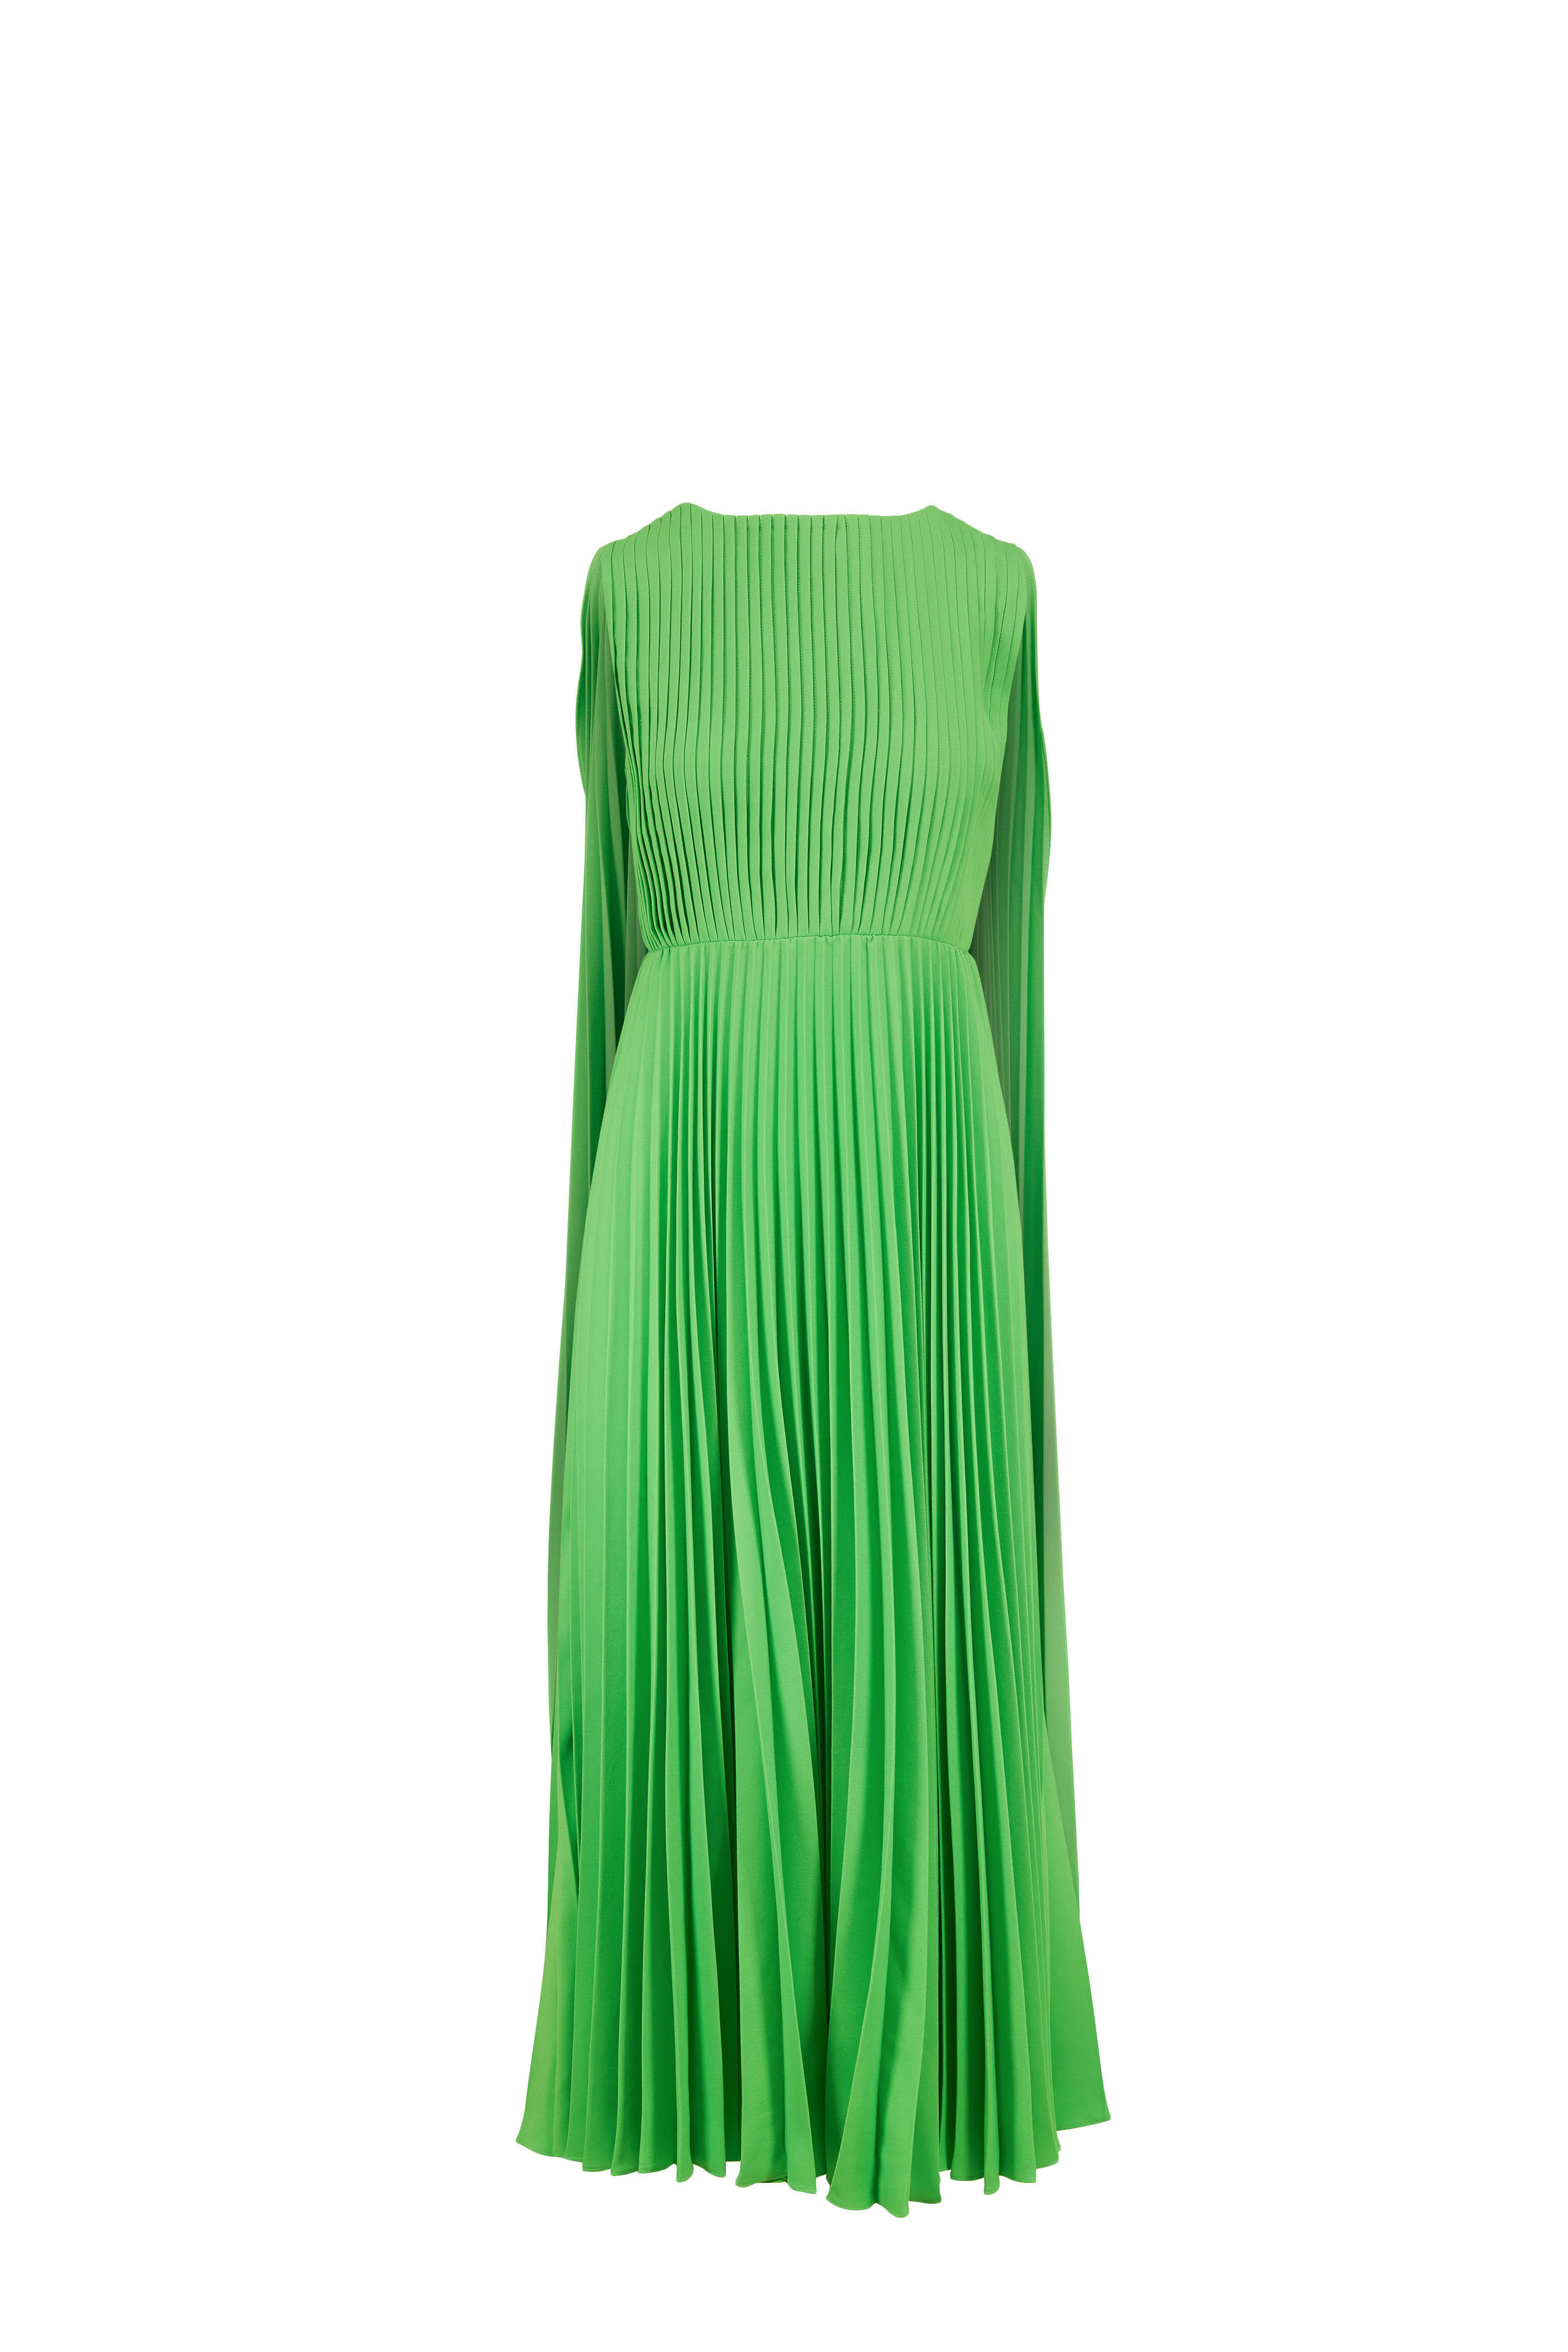 valentino green dress